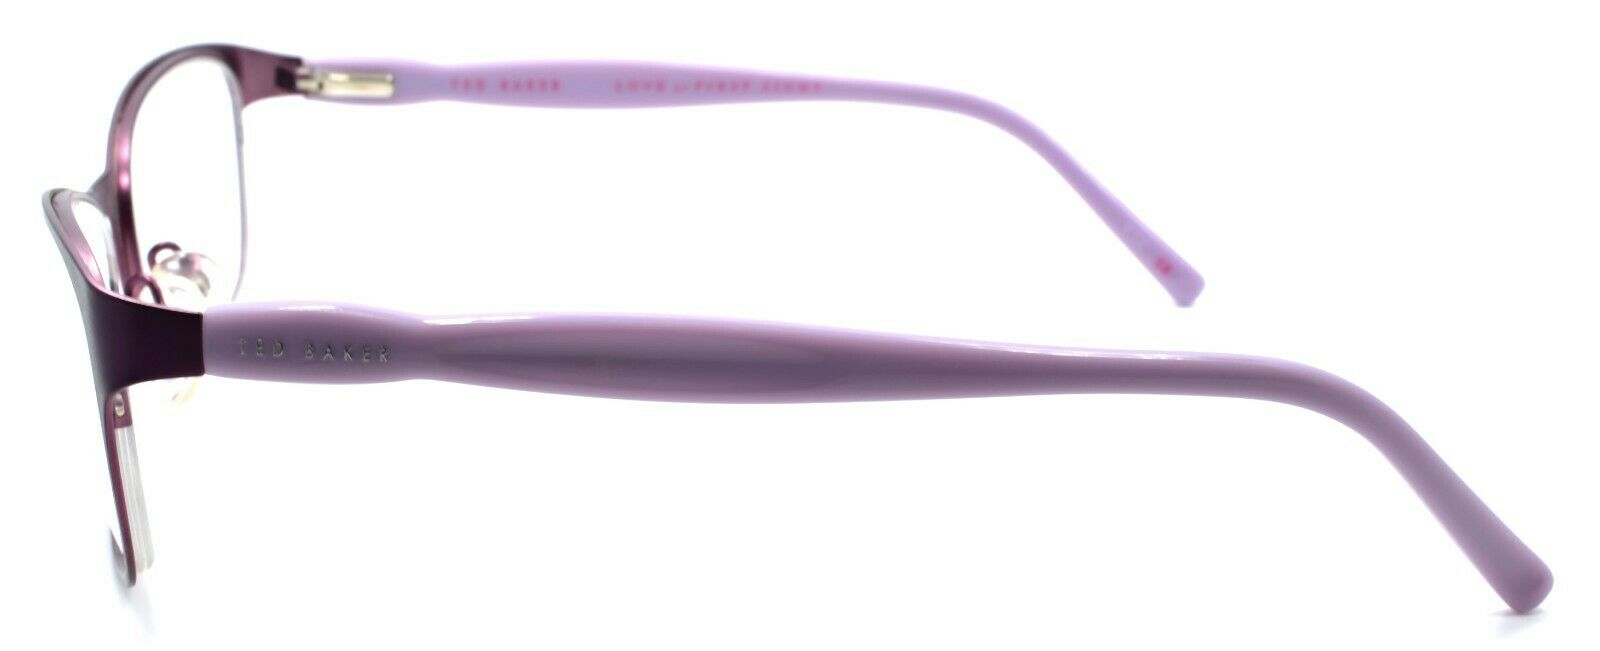 3-Ted Baker Rigger 2213 773 Women's Eyeglasses Frames 51-17-135 Purple / Lilac-4894327075850-IKSpecs